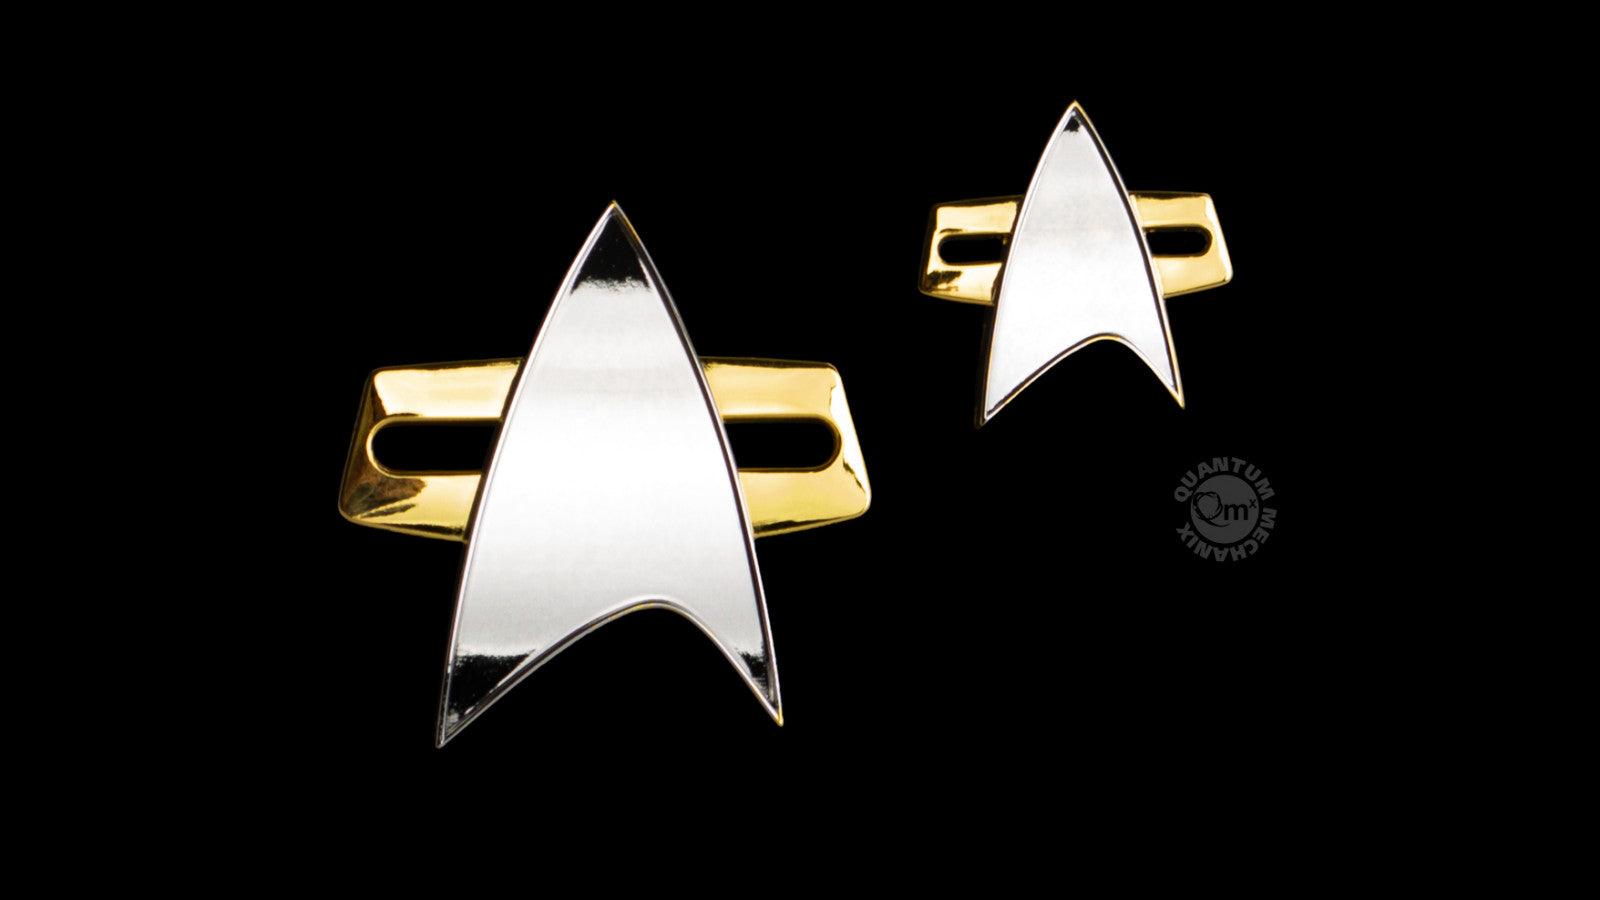 VR-86538 Star Trek Voyager Communicator Badge and Pin Set - Quantum Mechanix - Titan Pop Culture